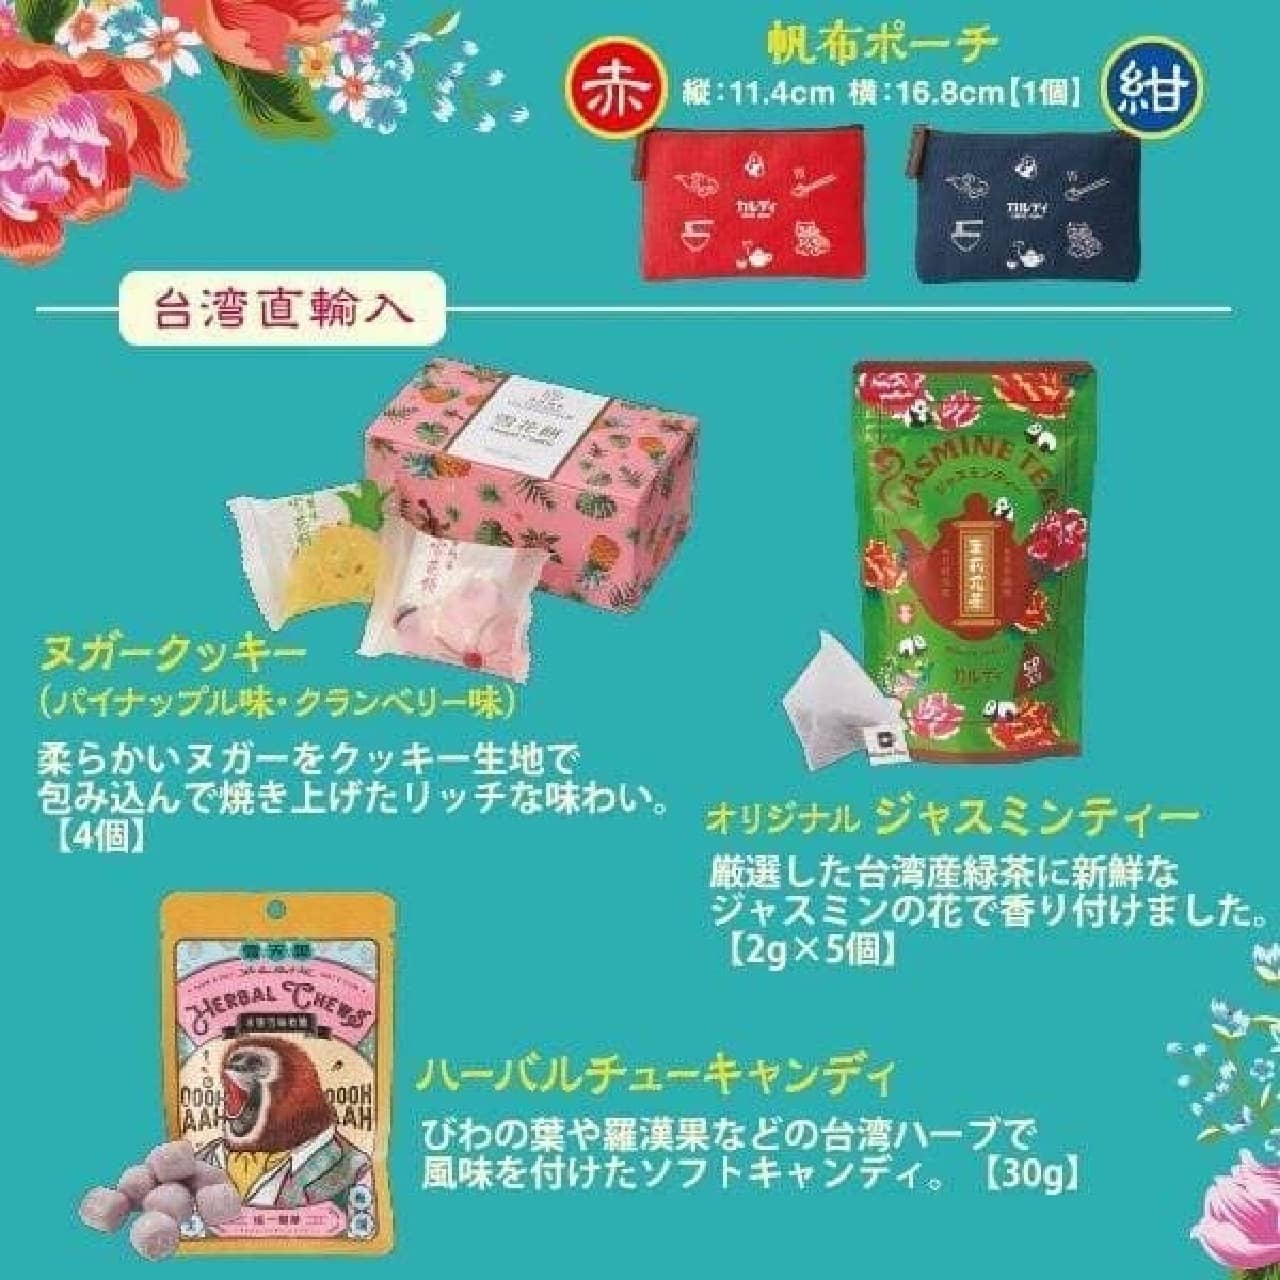 "Original canvas tote bag" packed with KALDI Taiwan food etc.